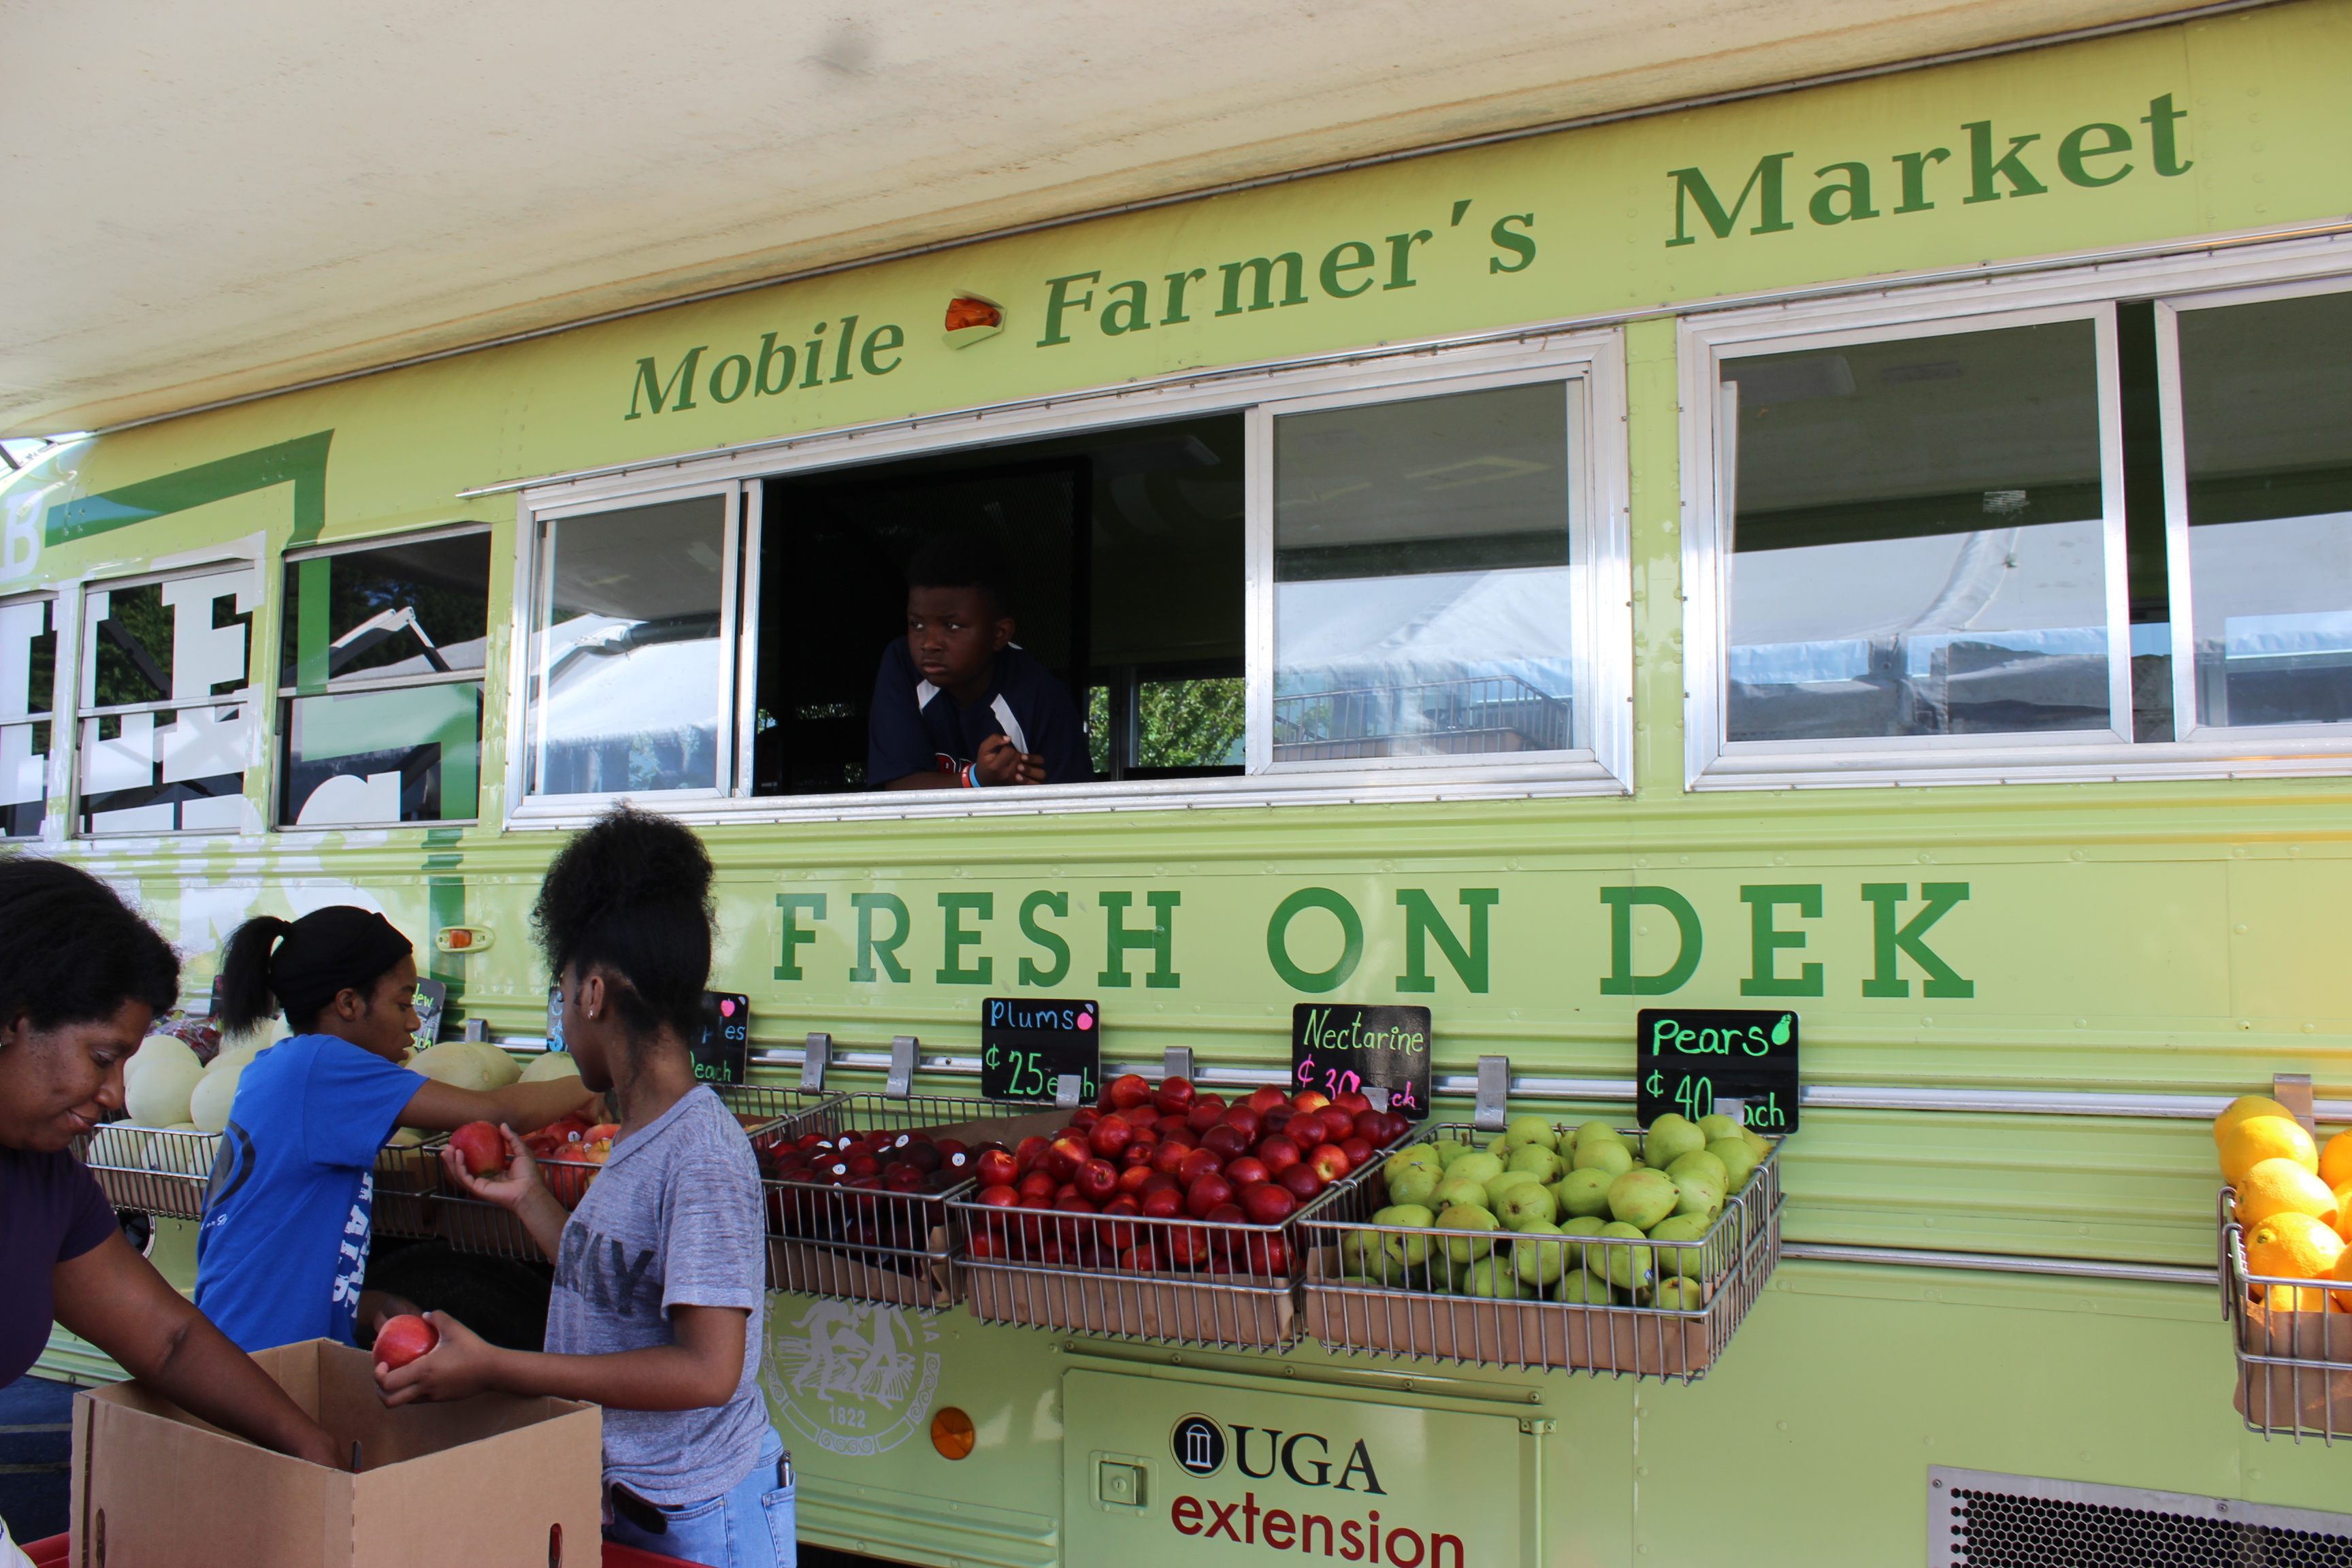 DeKalb County Fresh on DeK Mobile Farmers Market 